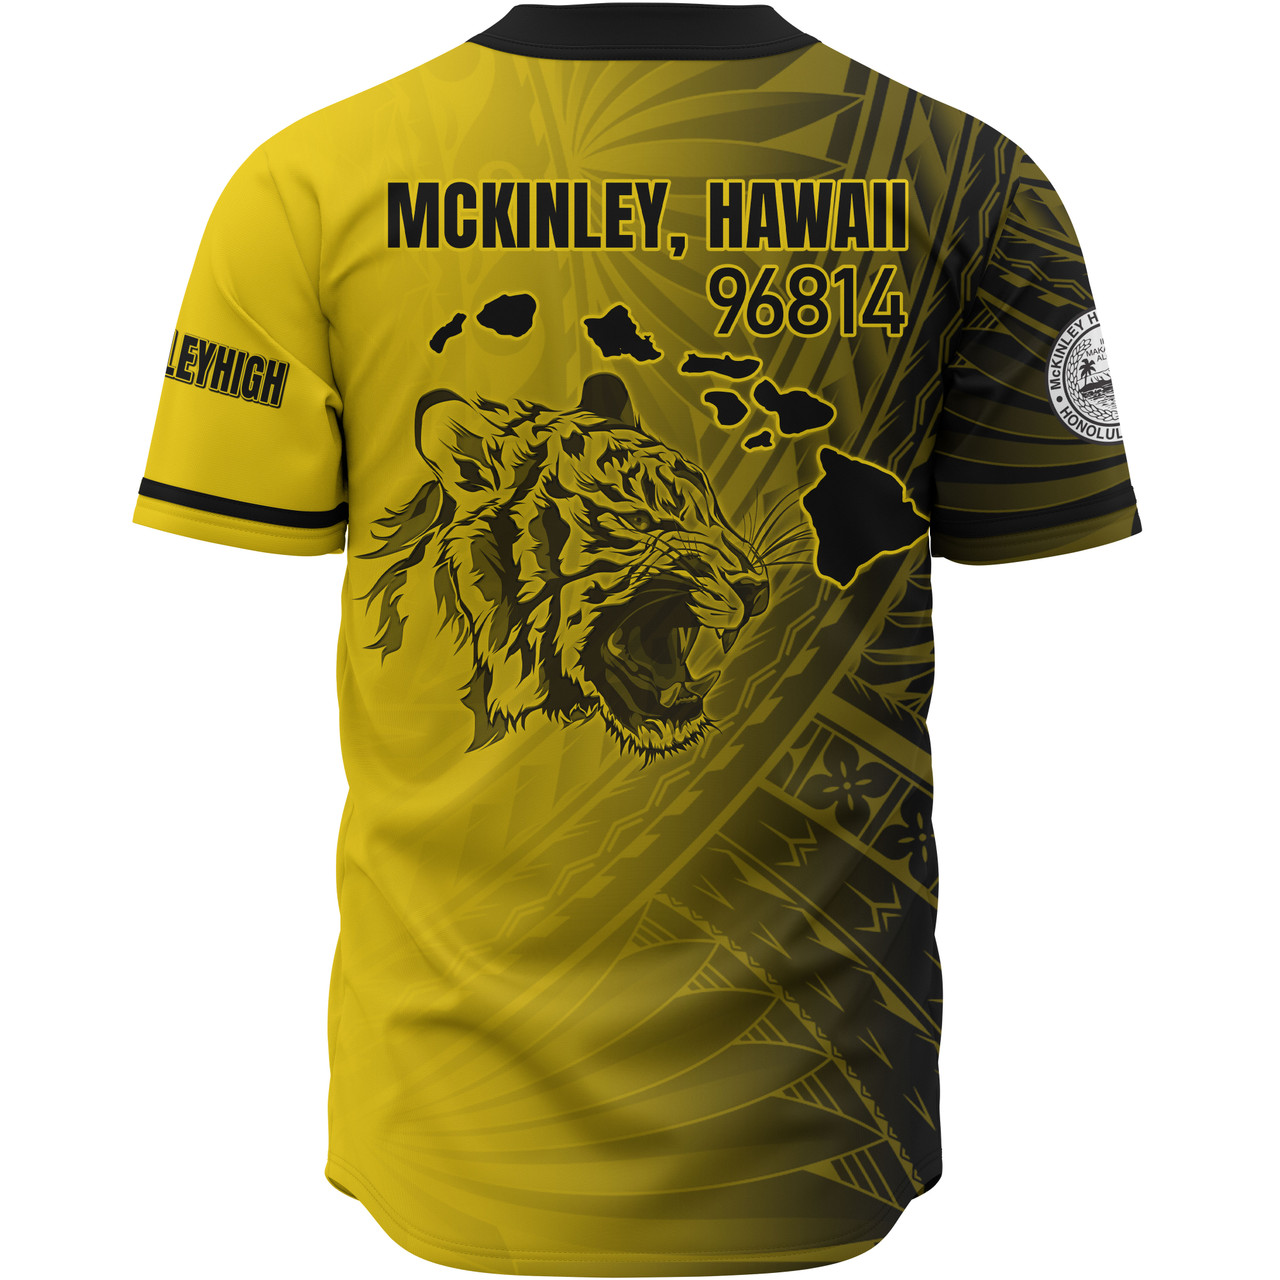 Hawaii McKinley High School Baseball Shirt - Tigers Mascot Hawaii Patterns